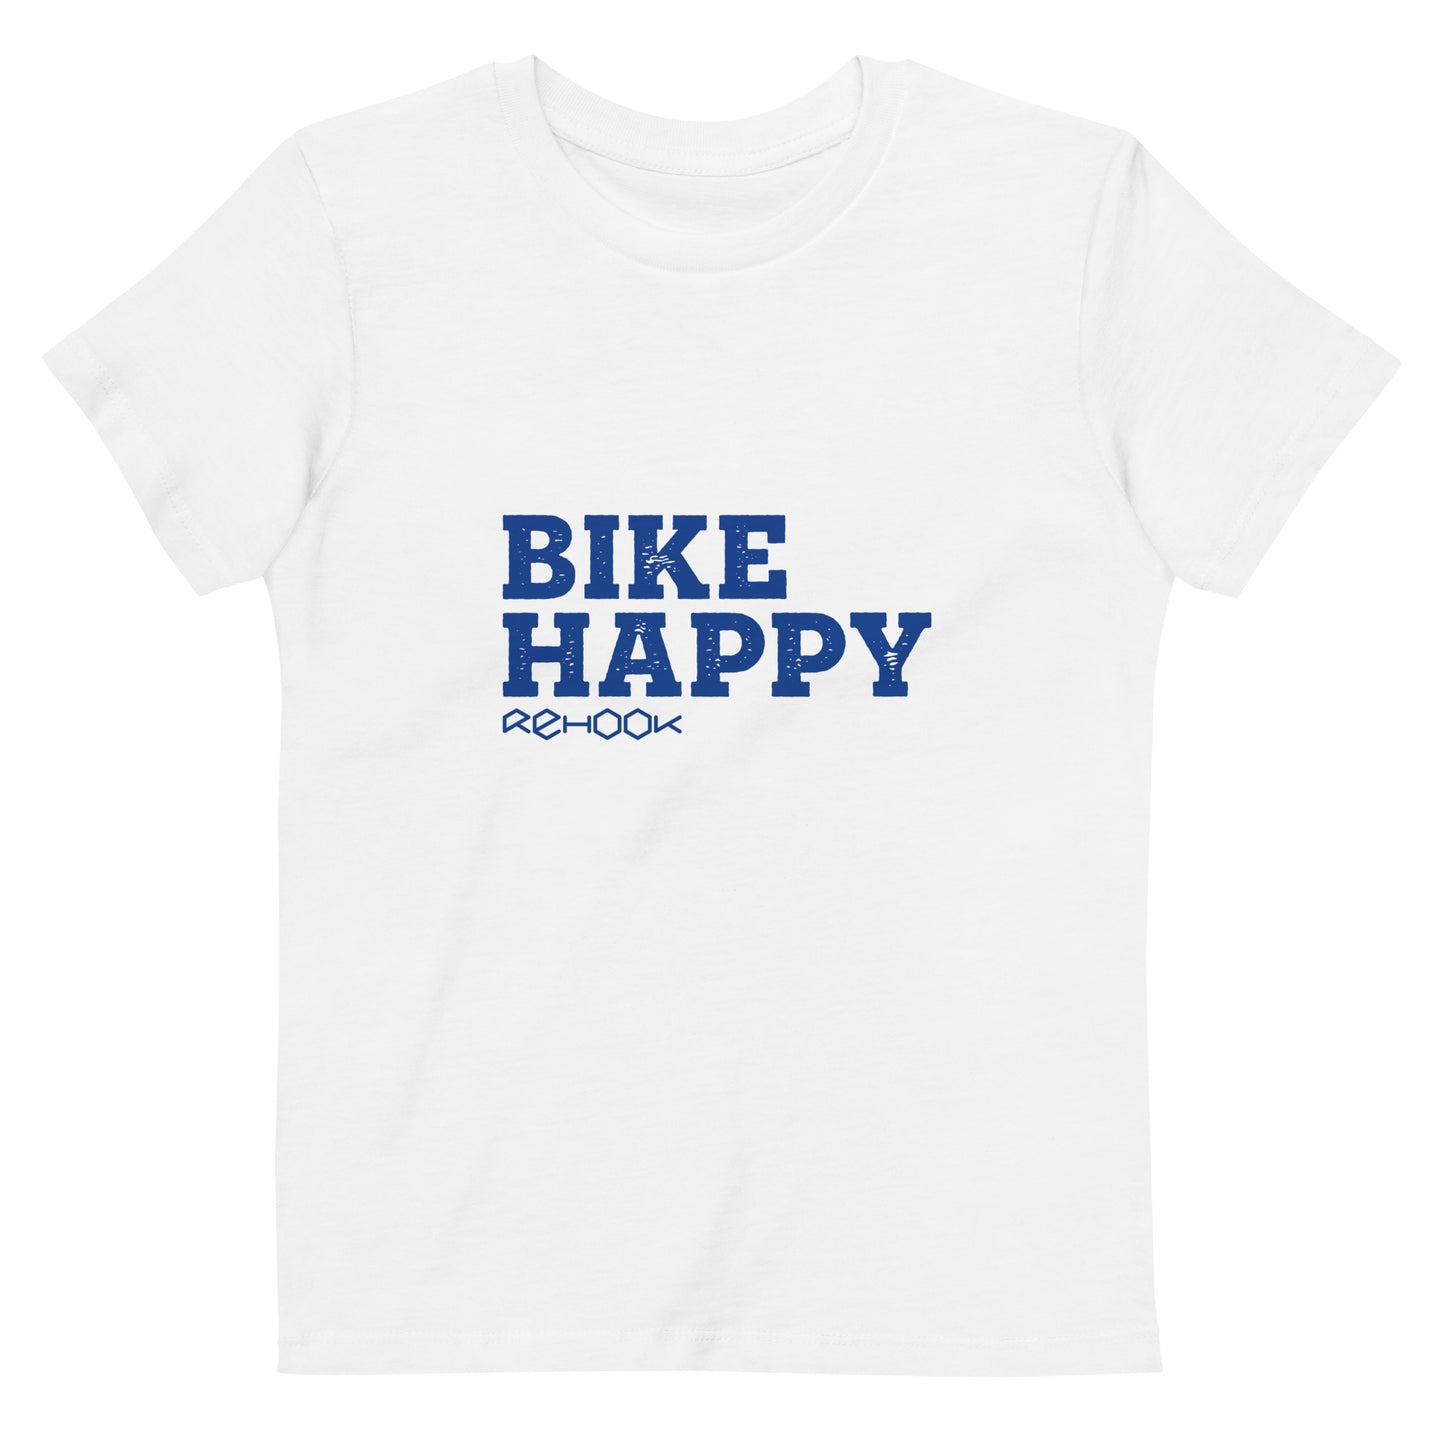 Rehook Bike Happy Kids Unisex Tee - White